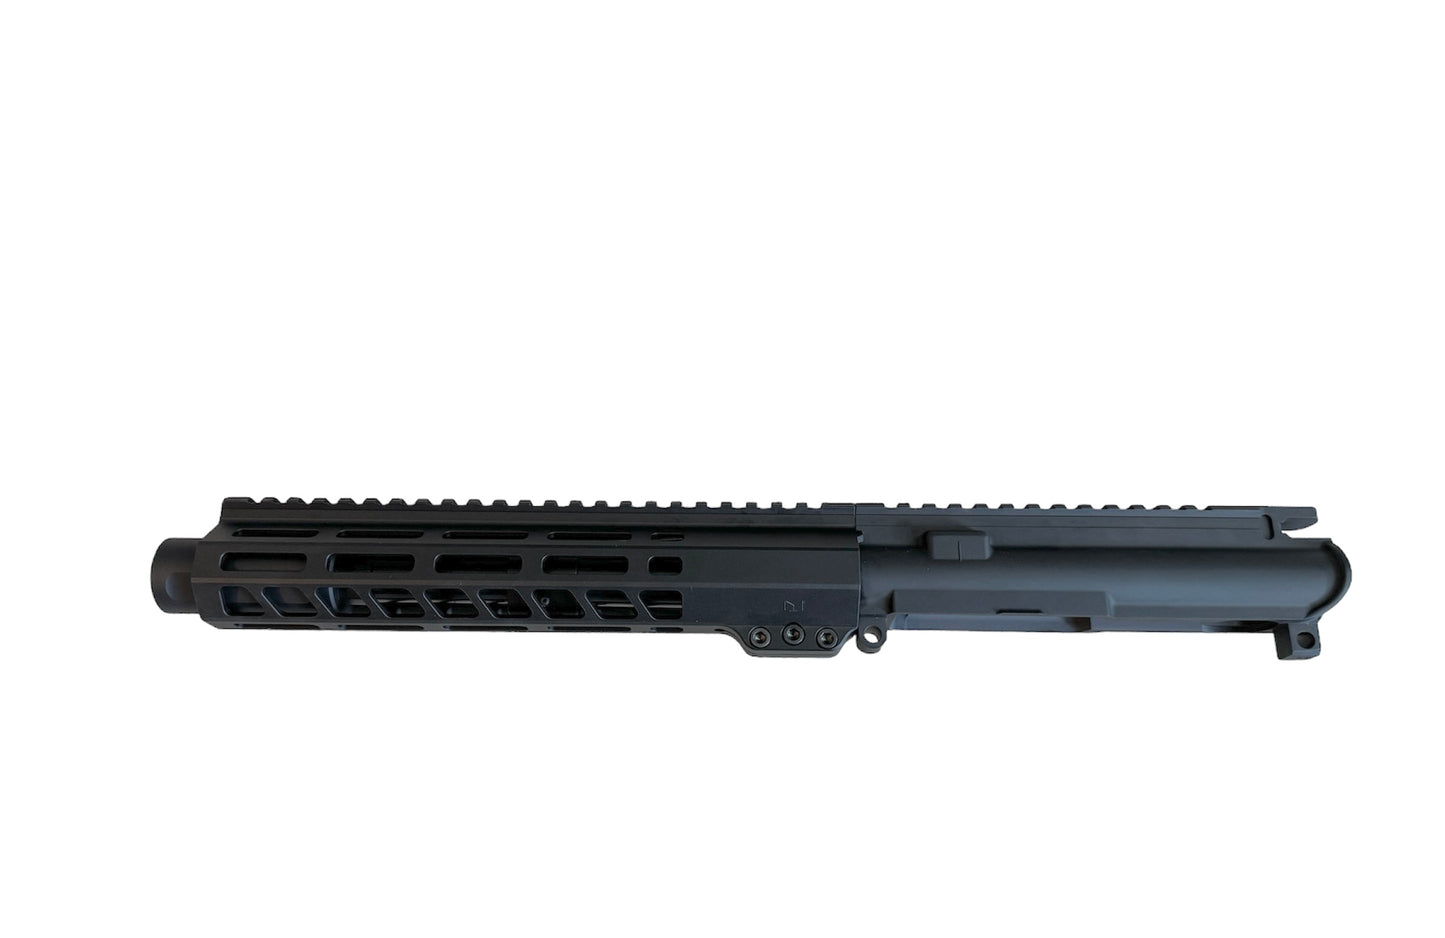 BCM Blem Upper Receiver 300 Blackout 8" 1:7 Twist Pistol length with BKF 9.75" Rail